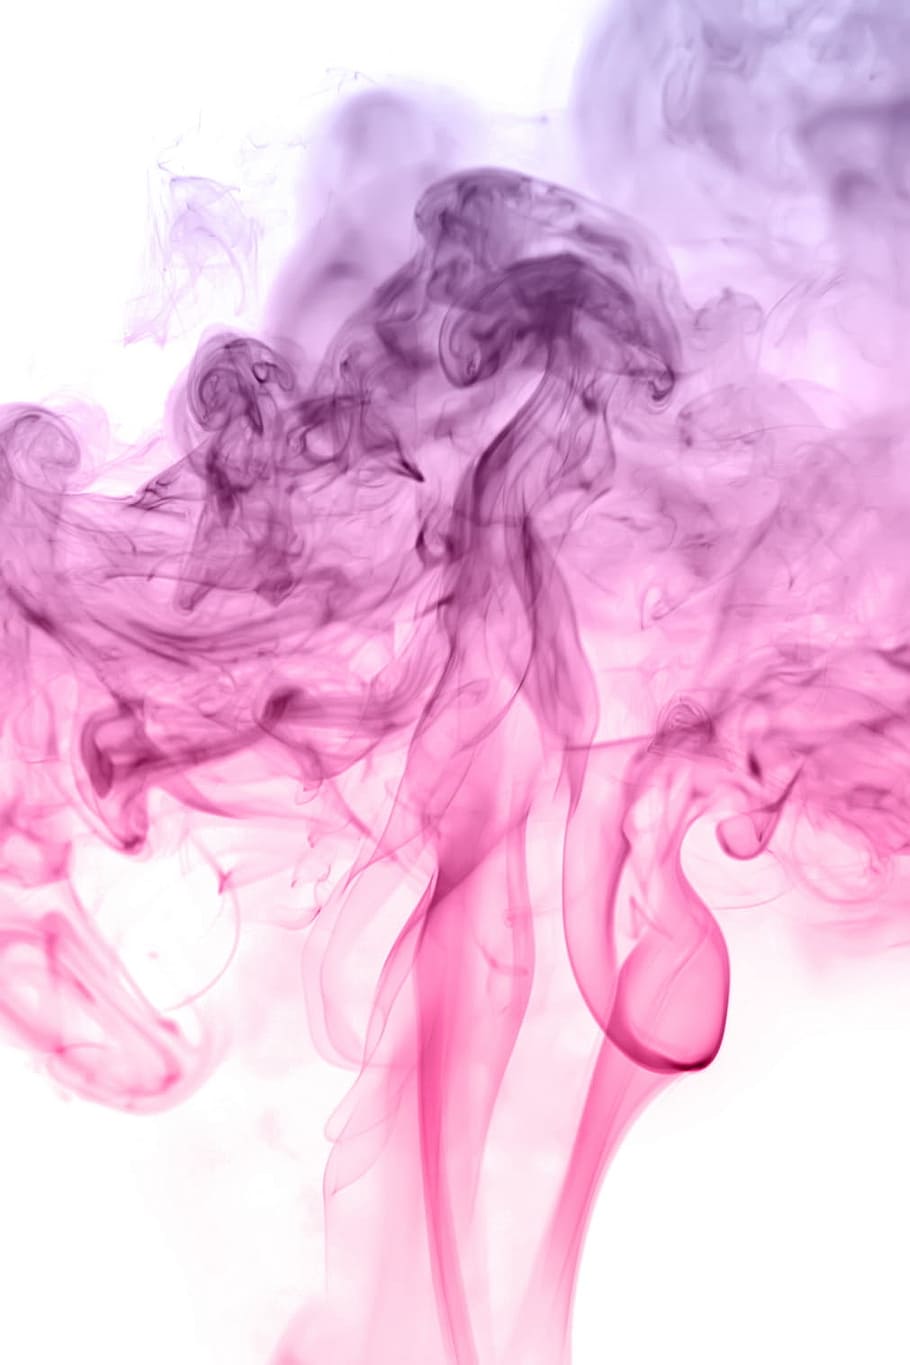 resumen, aroma, aromaterapia, fondo, color, olor, humo, movimiento, abstracto, humo - estructura física